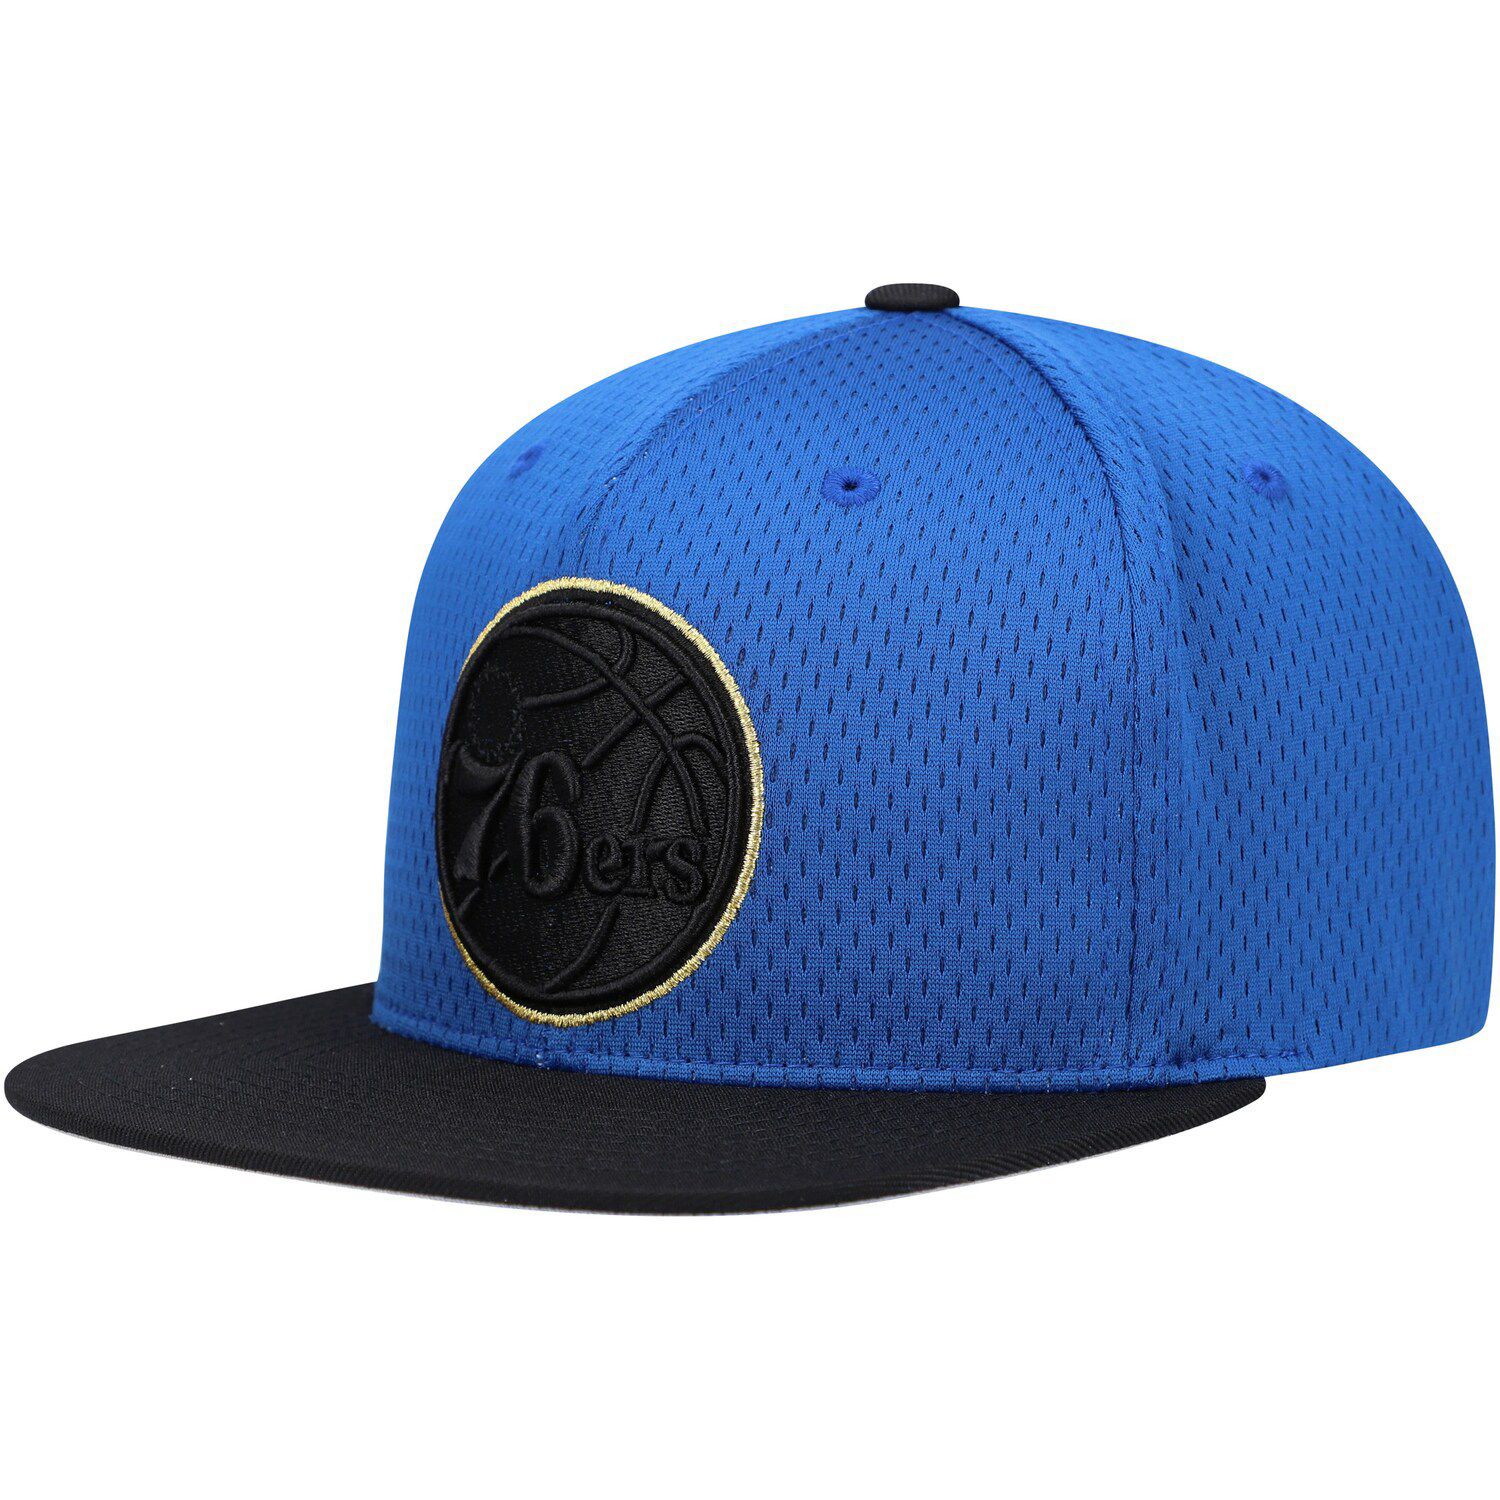 Image for Unbranded Men's Mitchell & Ness Royal Philadelphia 76ers Gold Block Snapback Hat at Kohl's.